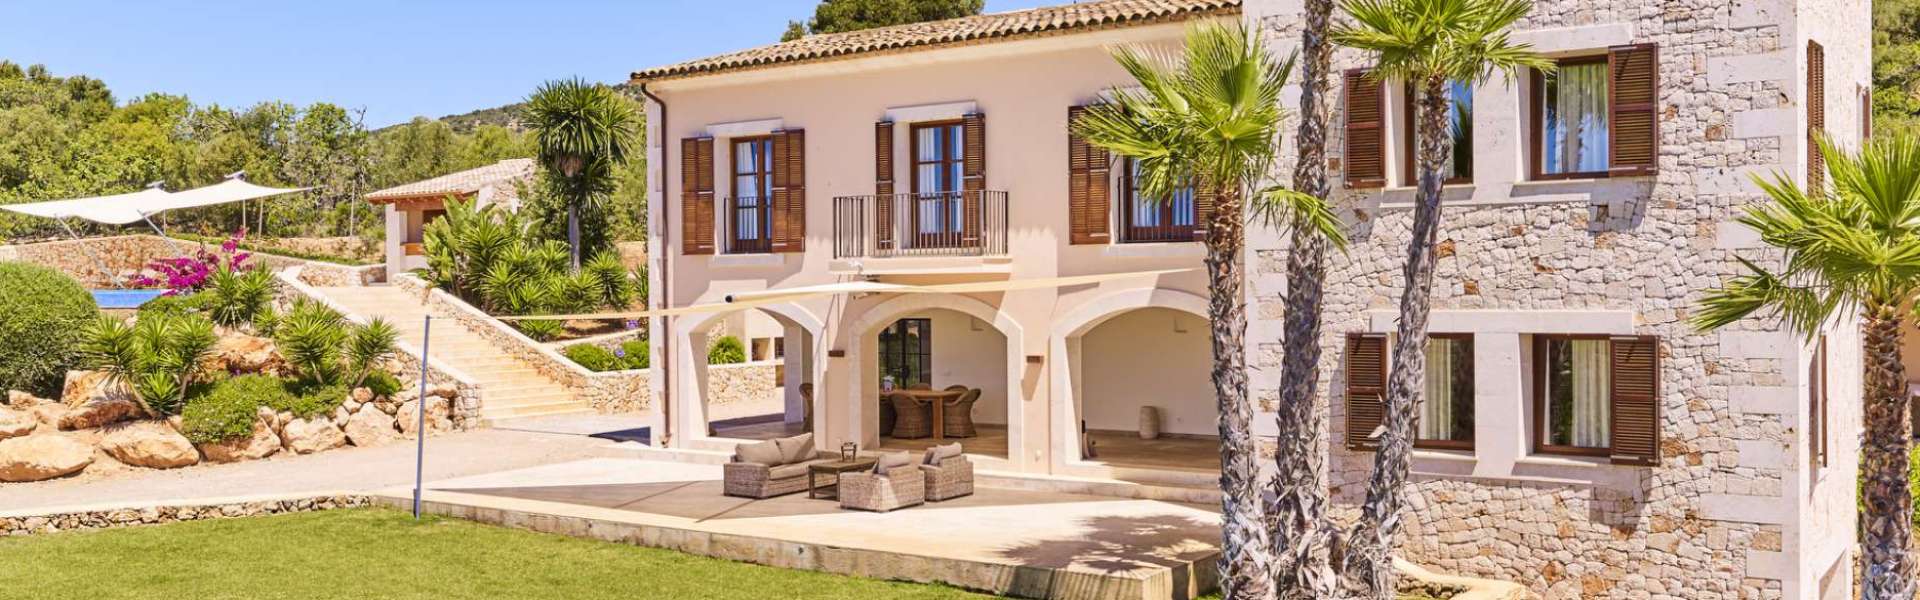 Alqueria Blanca - Luxurious country villa with sea view